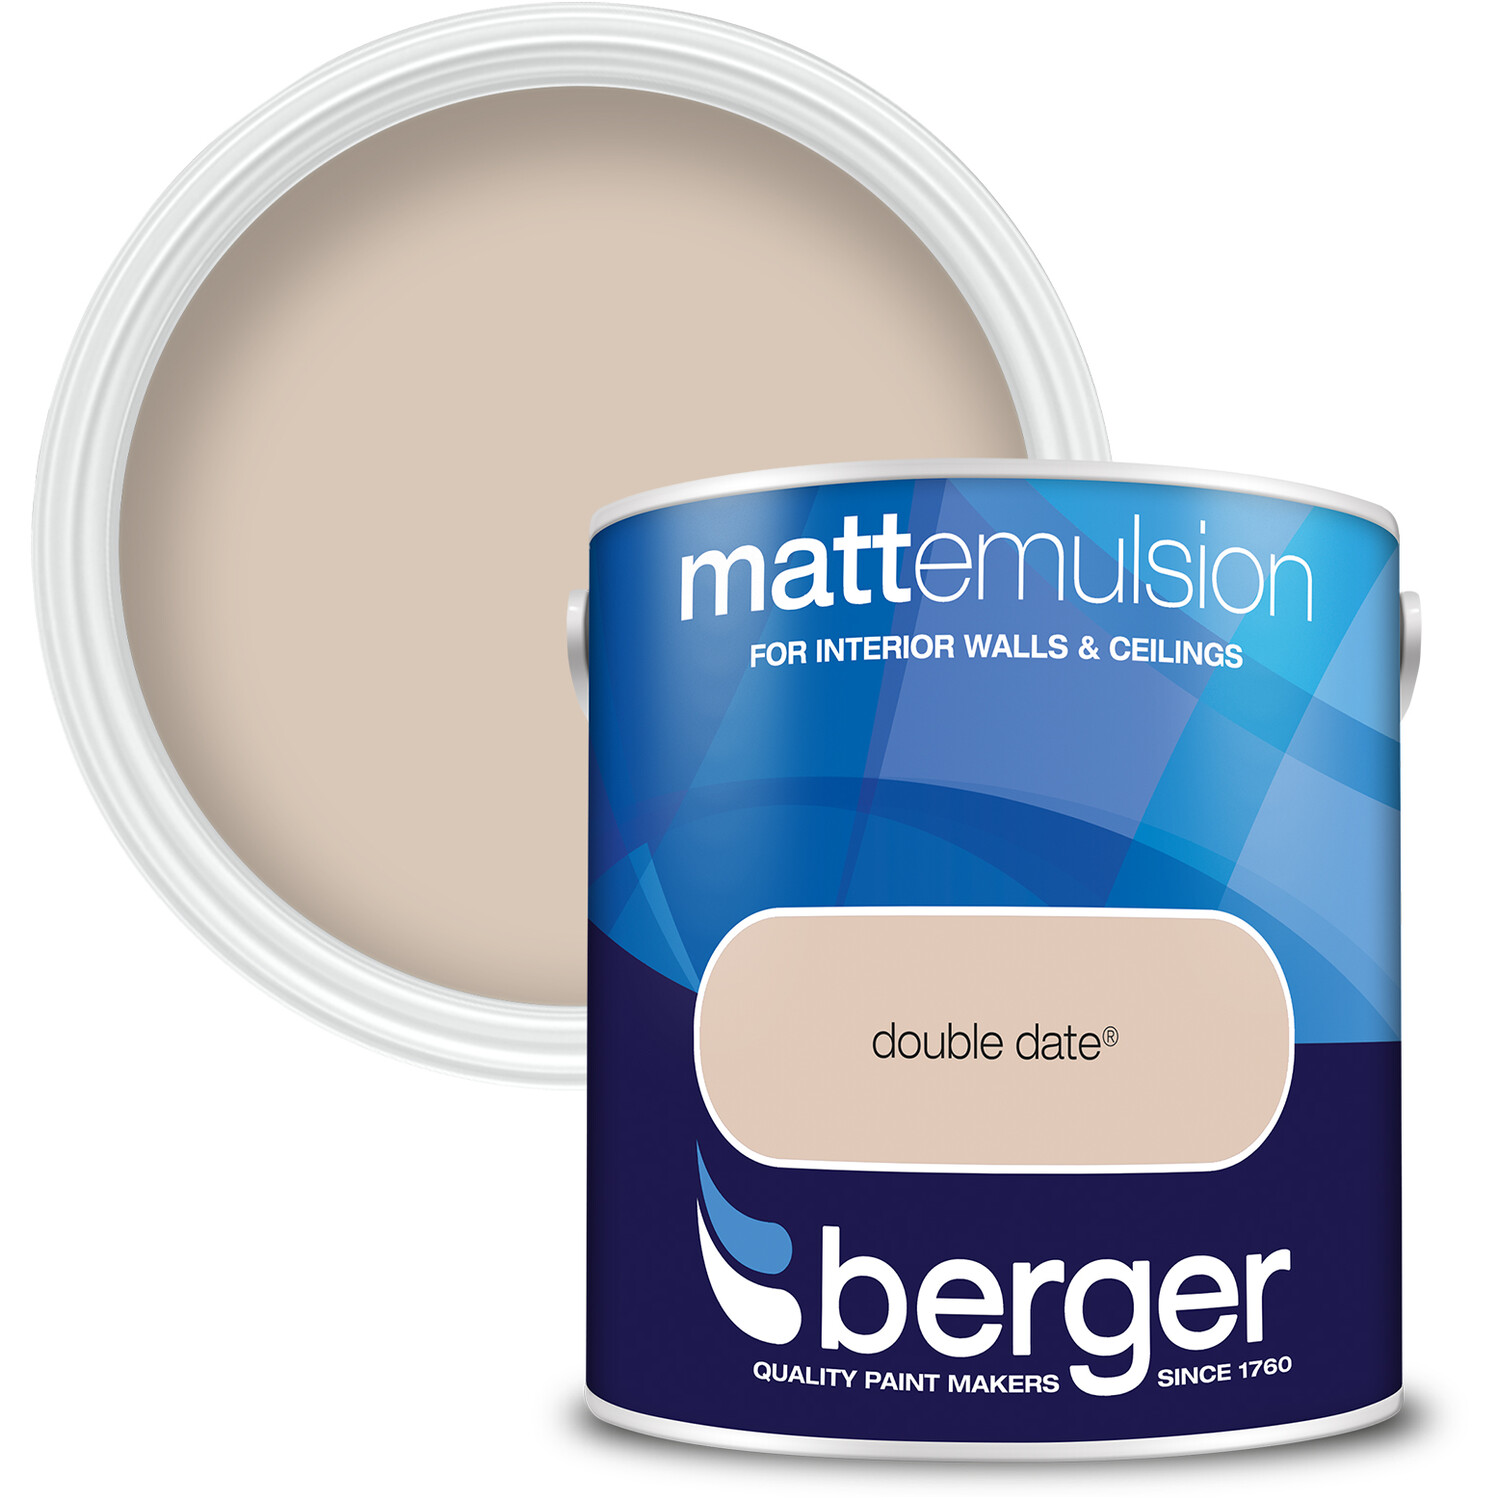 Berger Walls and Ceilings Double Date Matt Emulsion Paint 2.5L Image 1